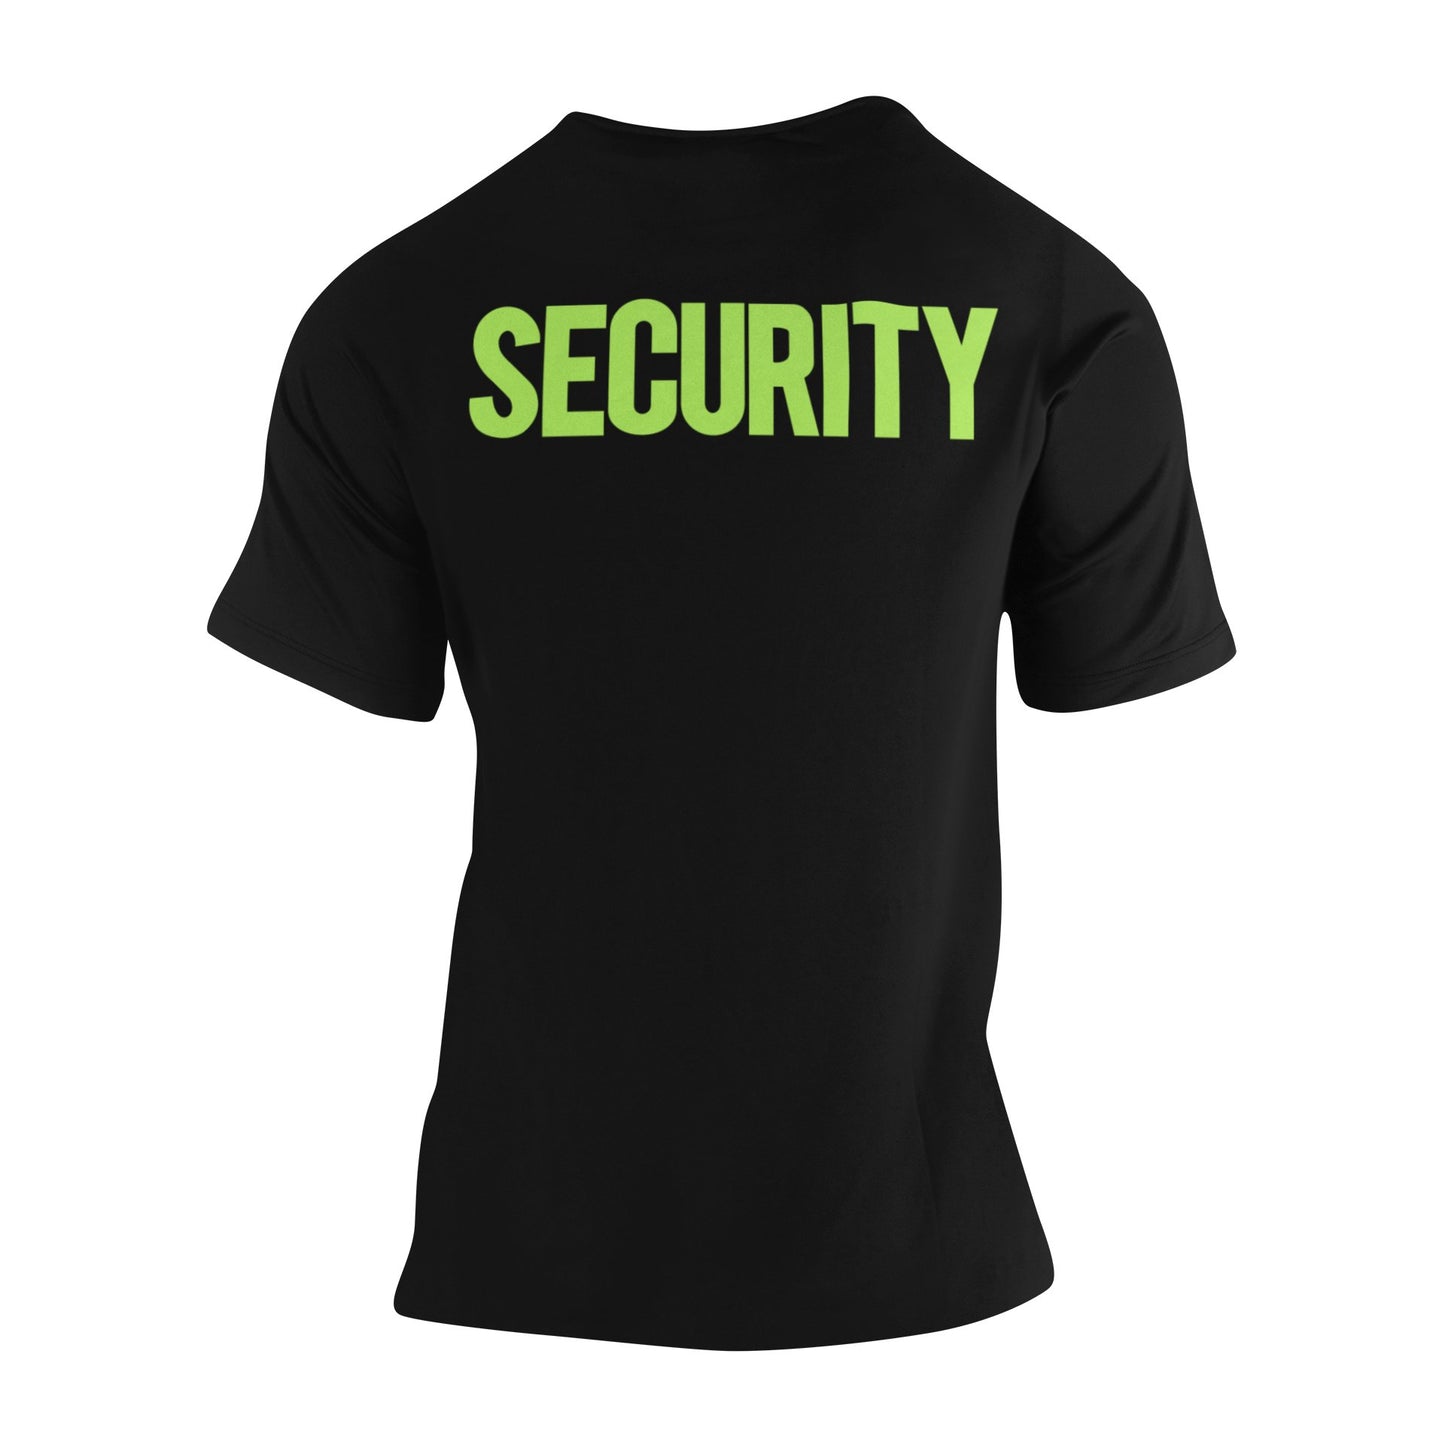 Black & Neon Security Tee Front & Back Screen Printed Men's T-Shirt